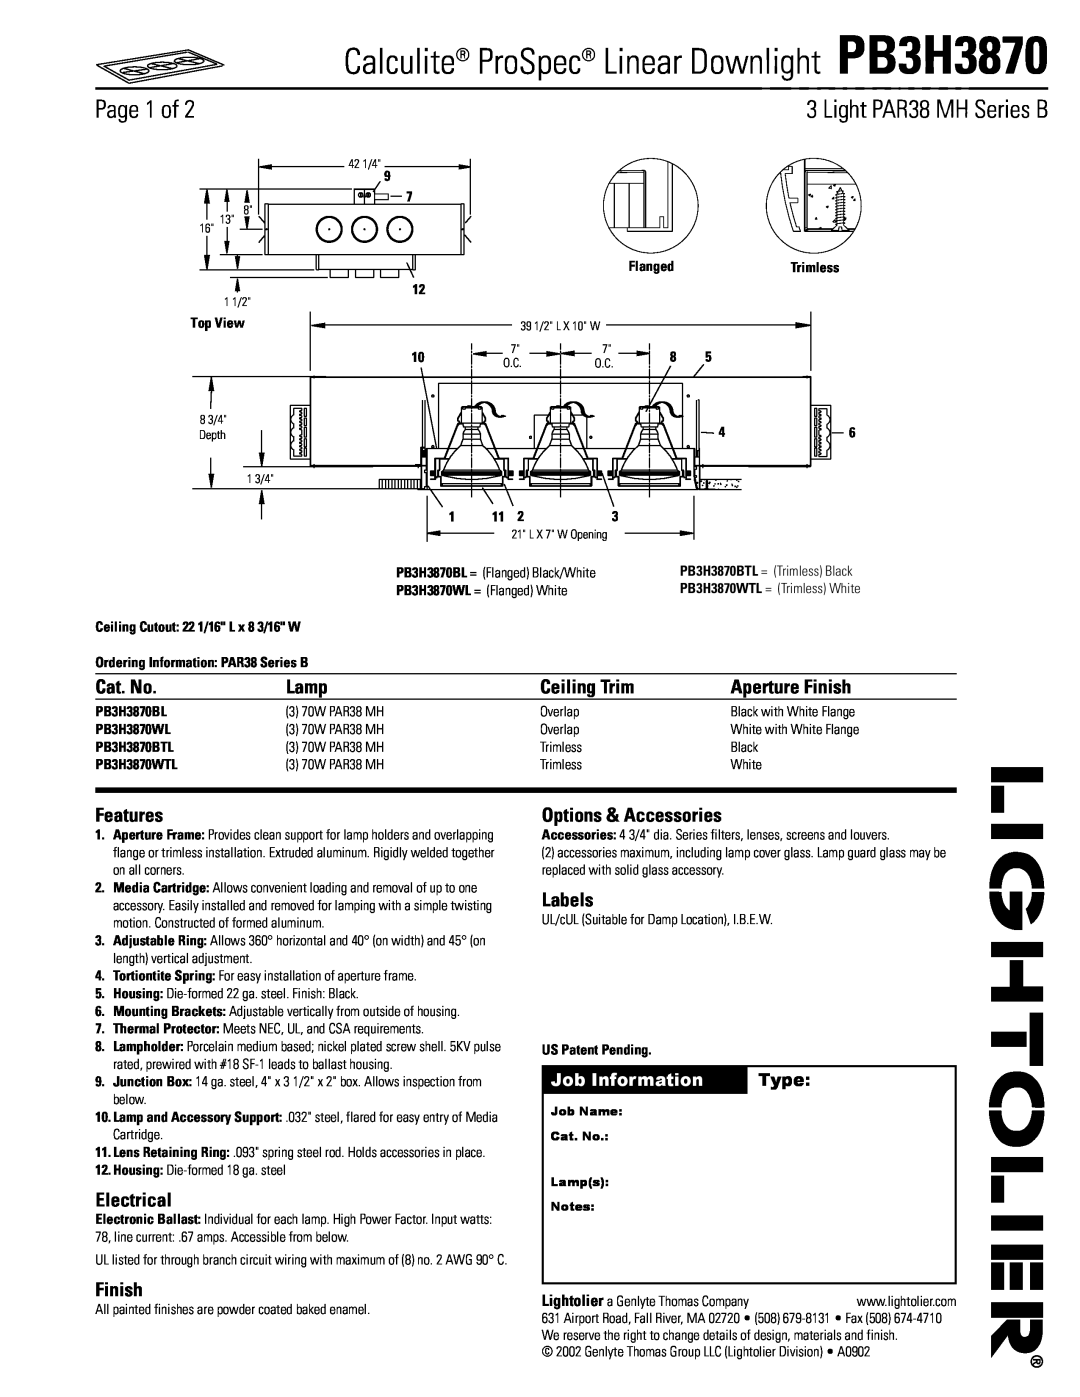 Lightolier PB3H3870 manual Page 1 of 23 Light PAR38 MH Series B, Cat. No, Lamp, Ceiling Trim, Aperture Finish, Features 